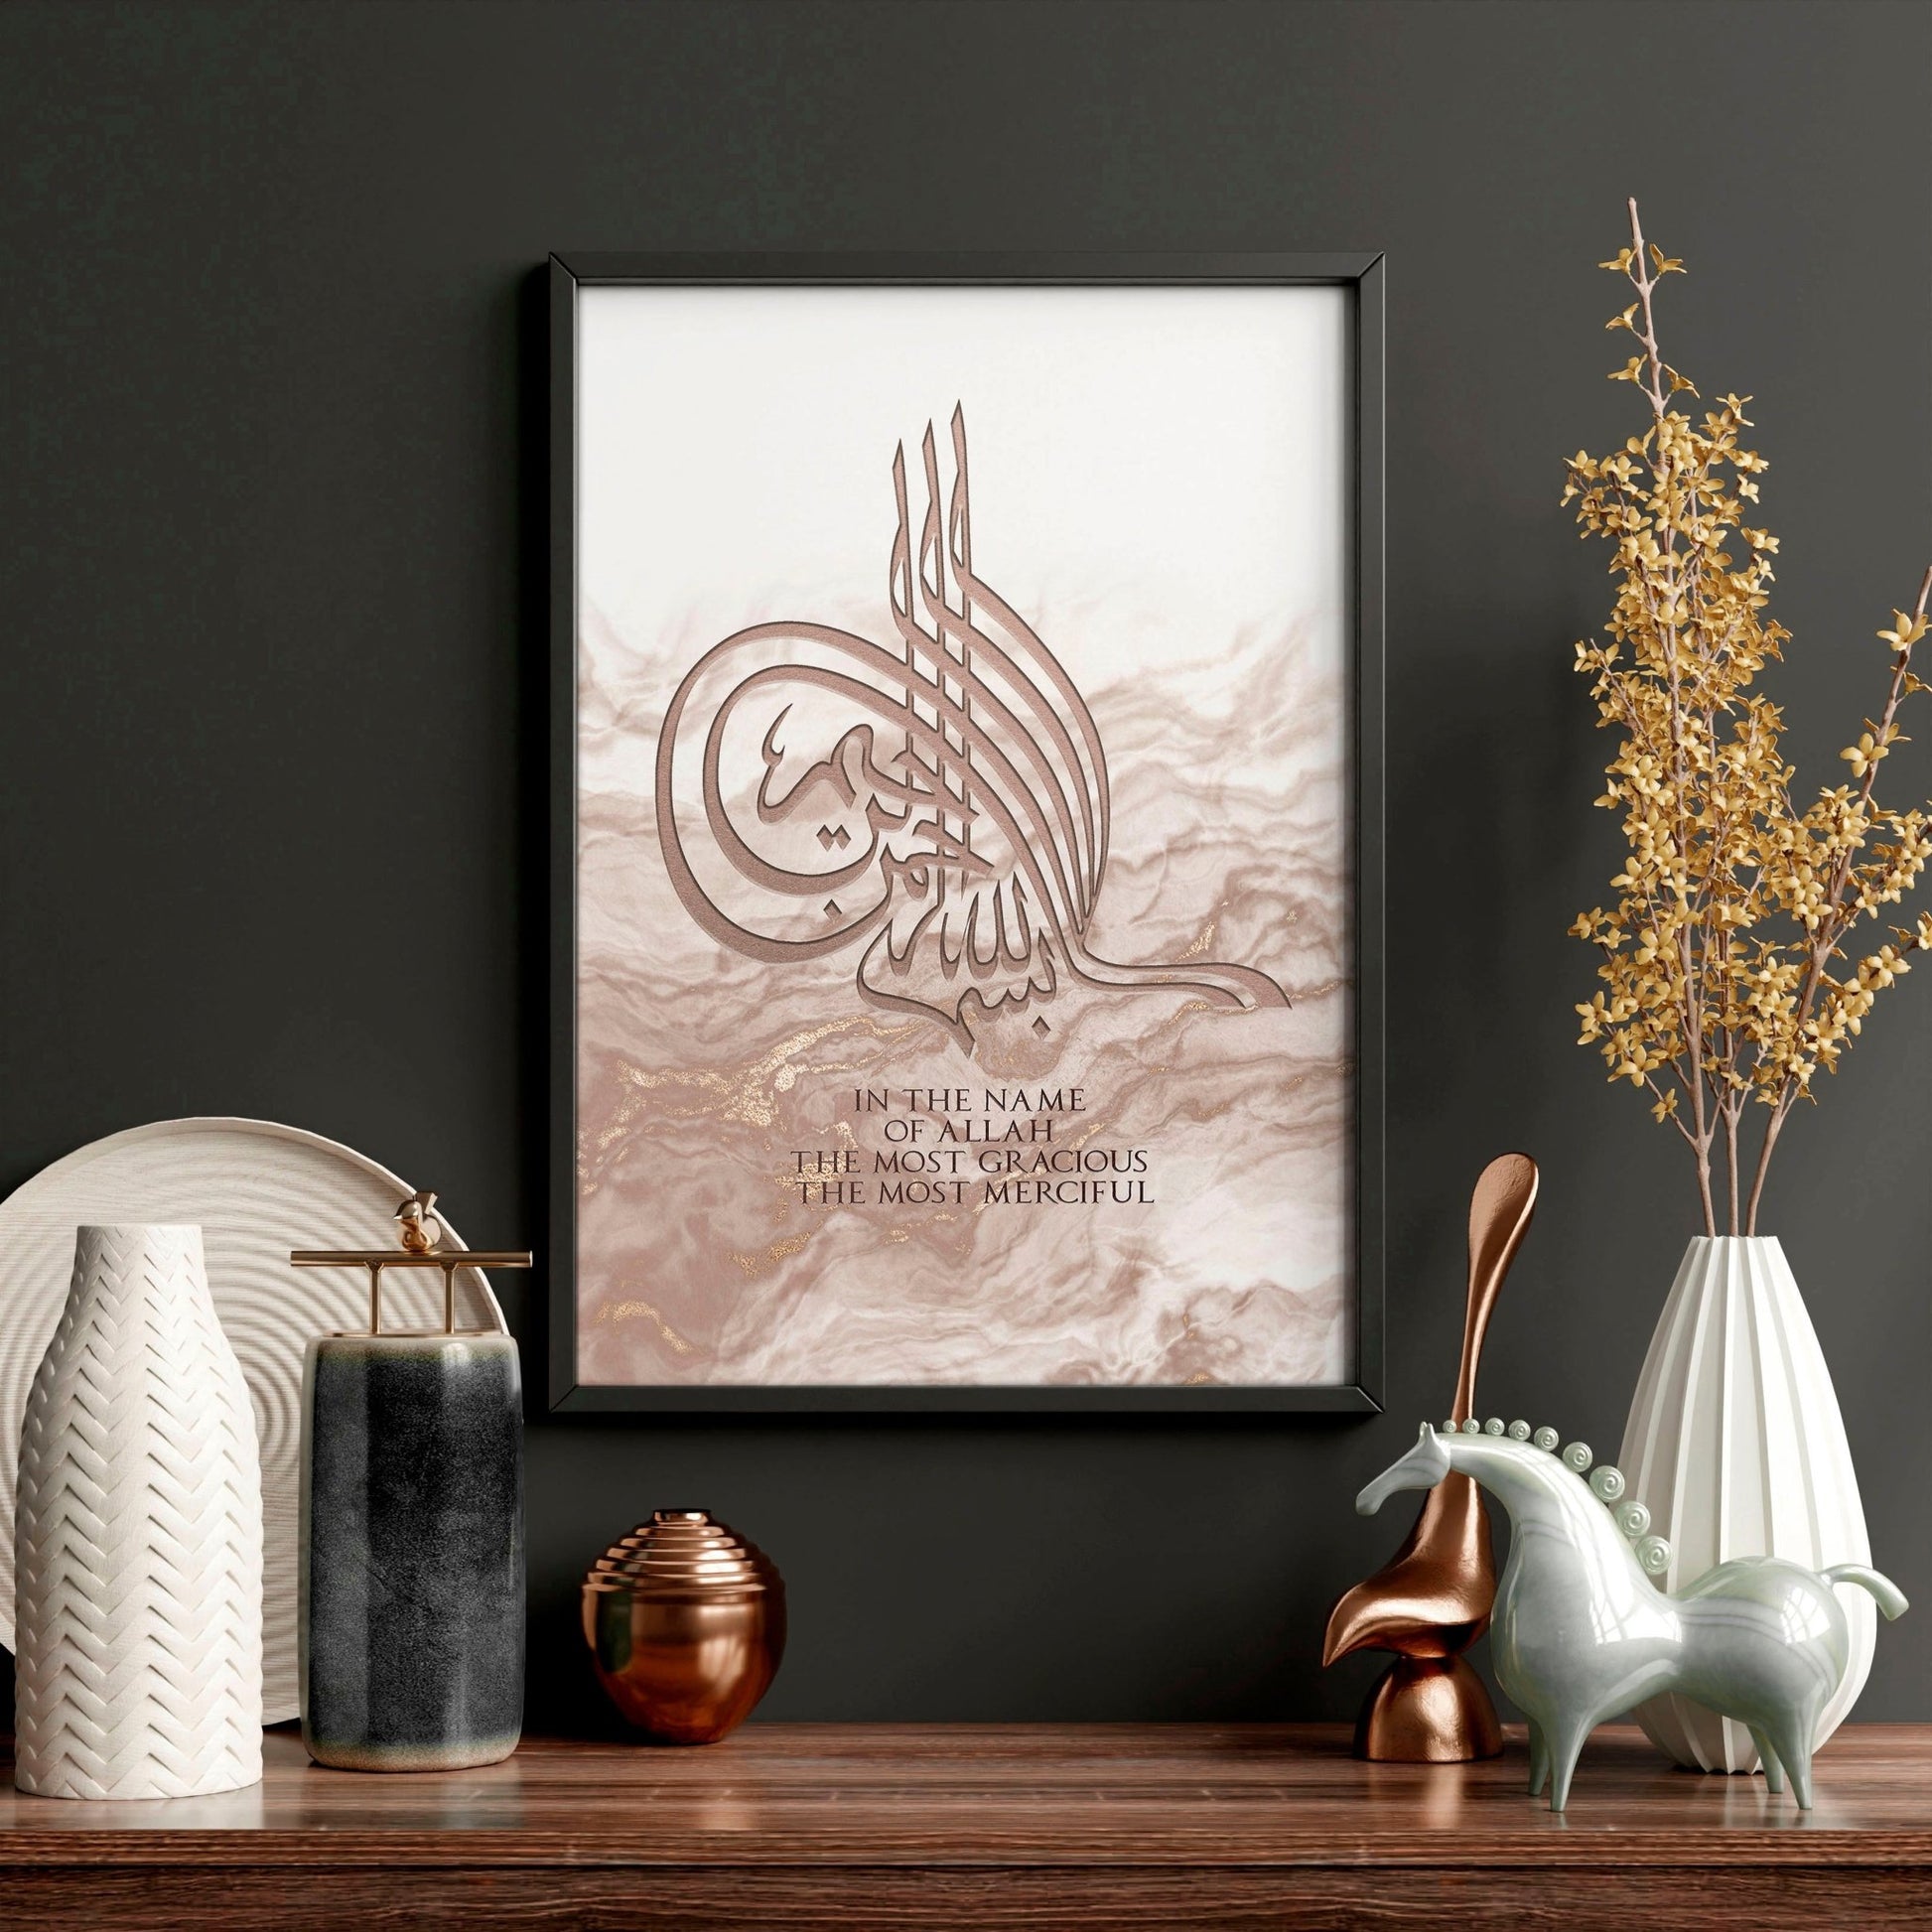 Arabic decoration for Eid | Islamic wall art print - About Wall Art